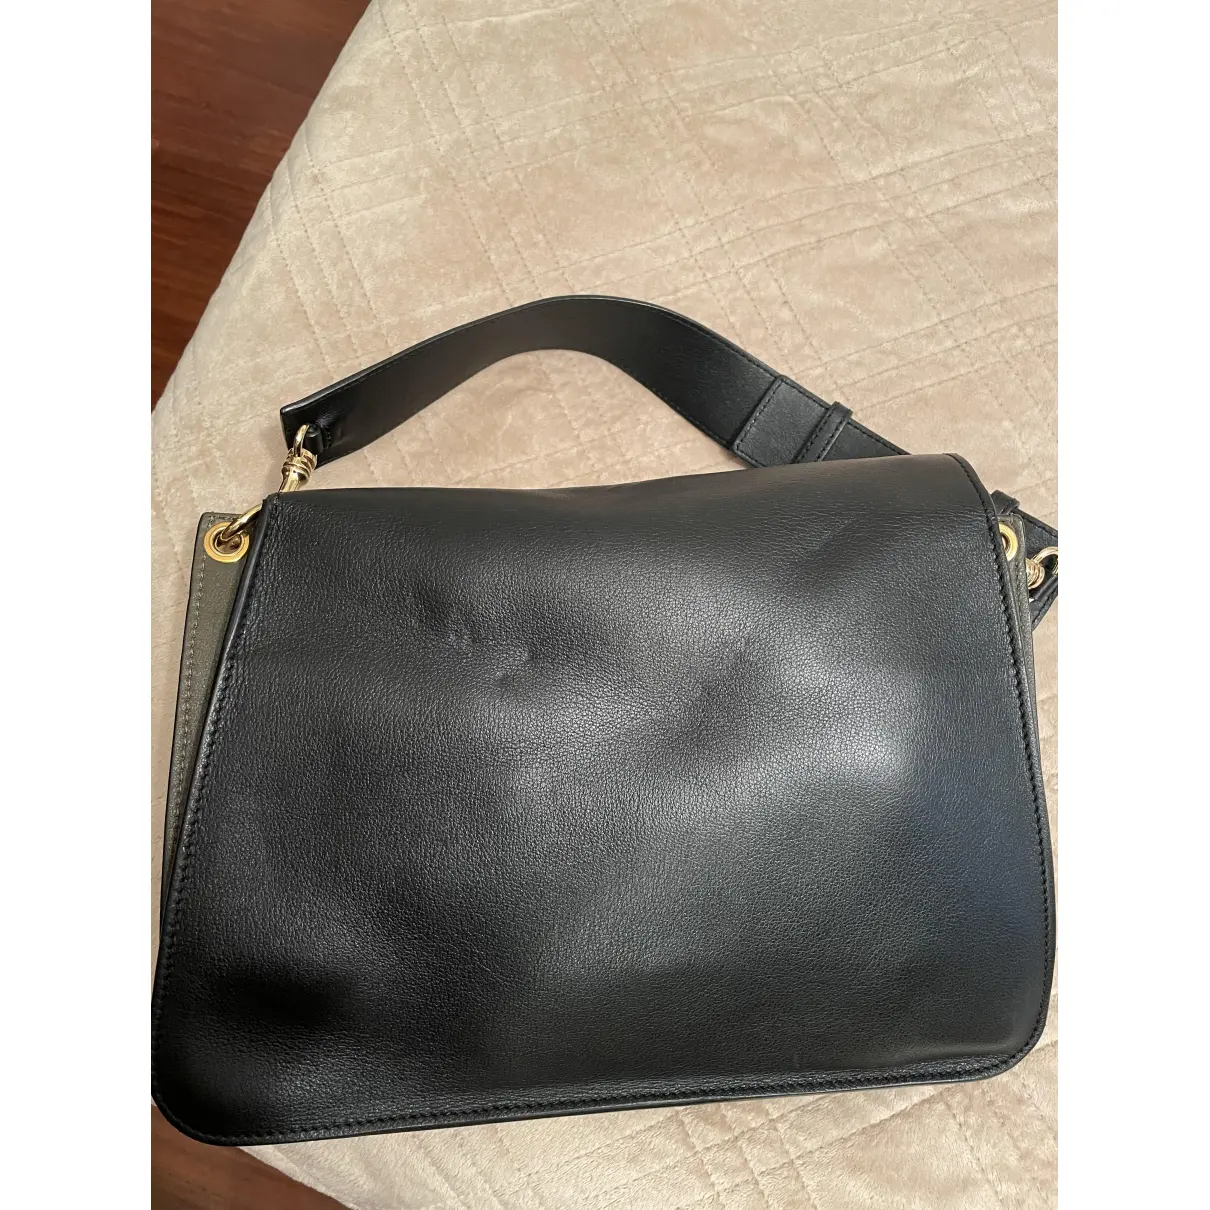 Buy JW Anderson Pierce leather handbag online